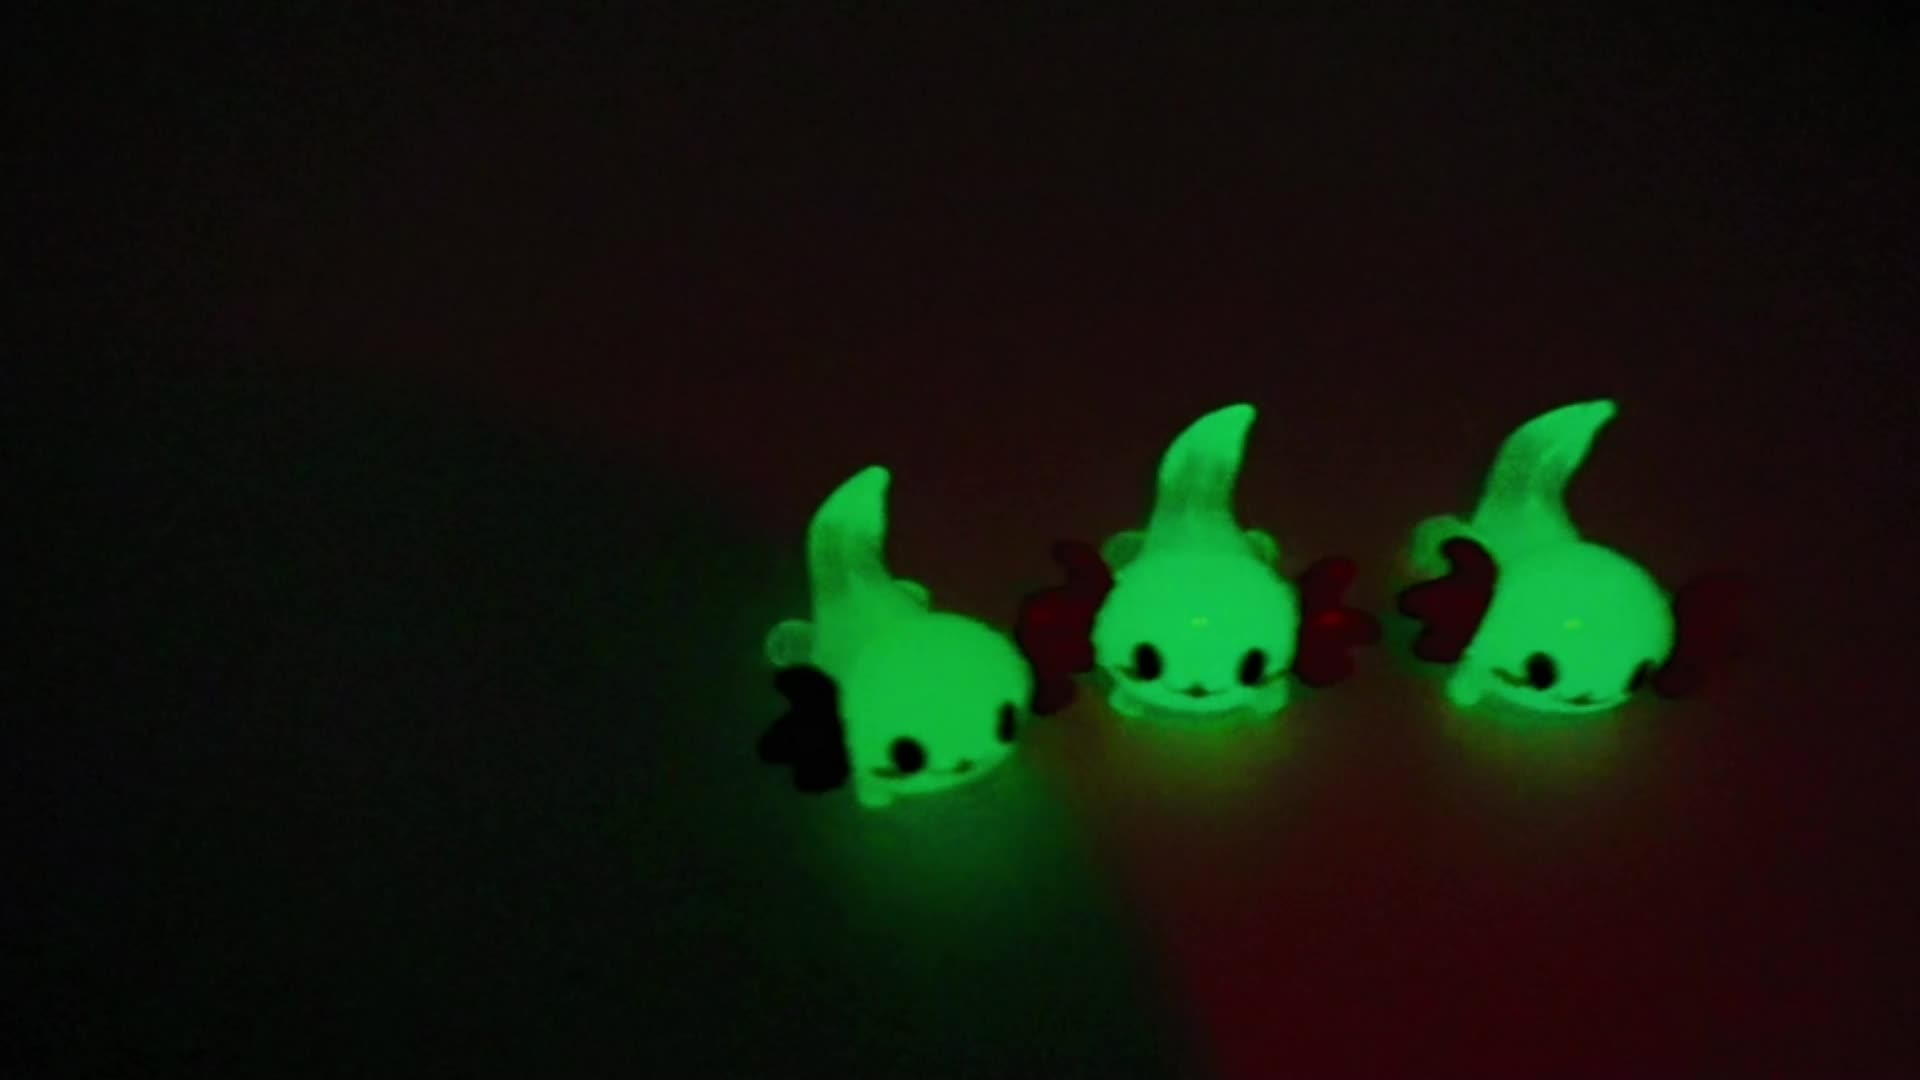 Luminous Mini Resin Axolotl Tiny Figurines Ornament for DIY Craft